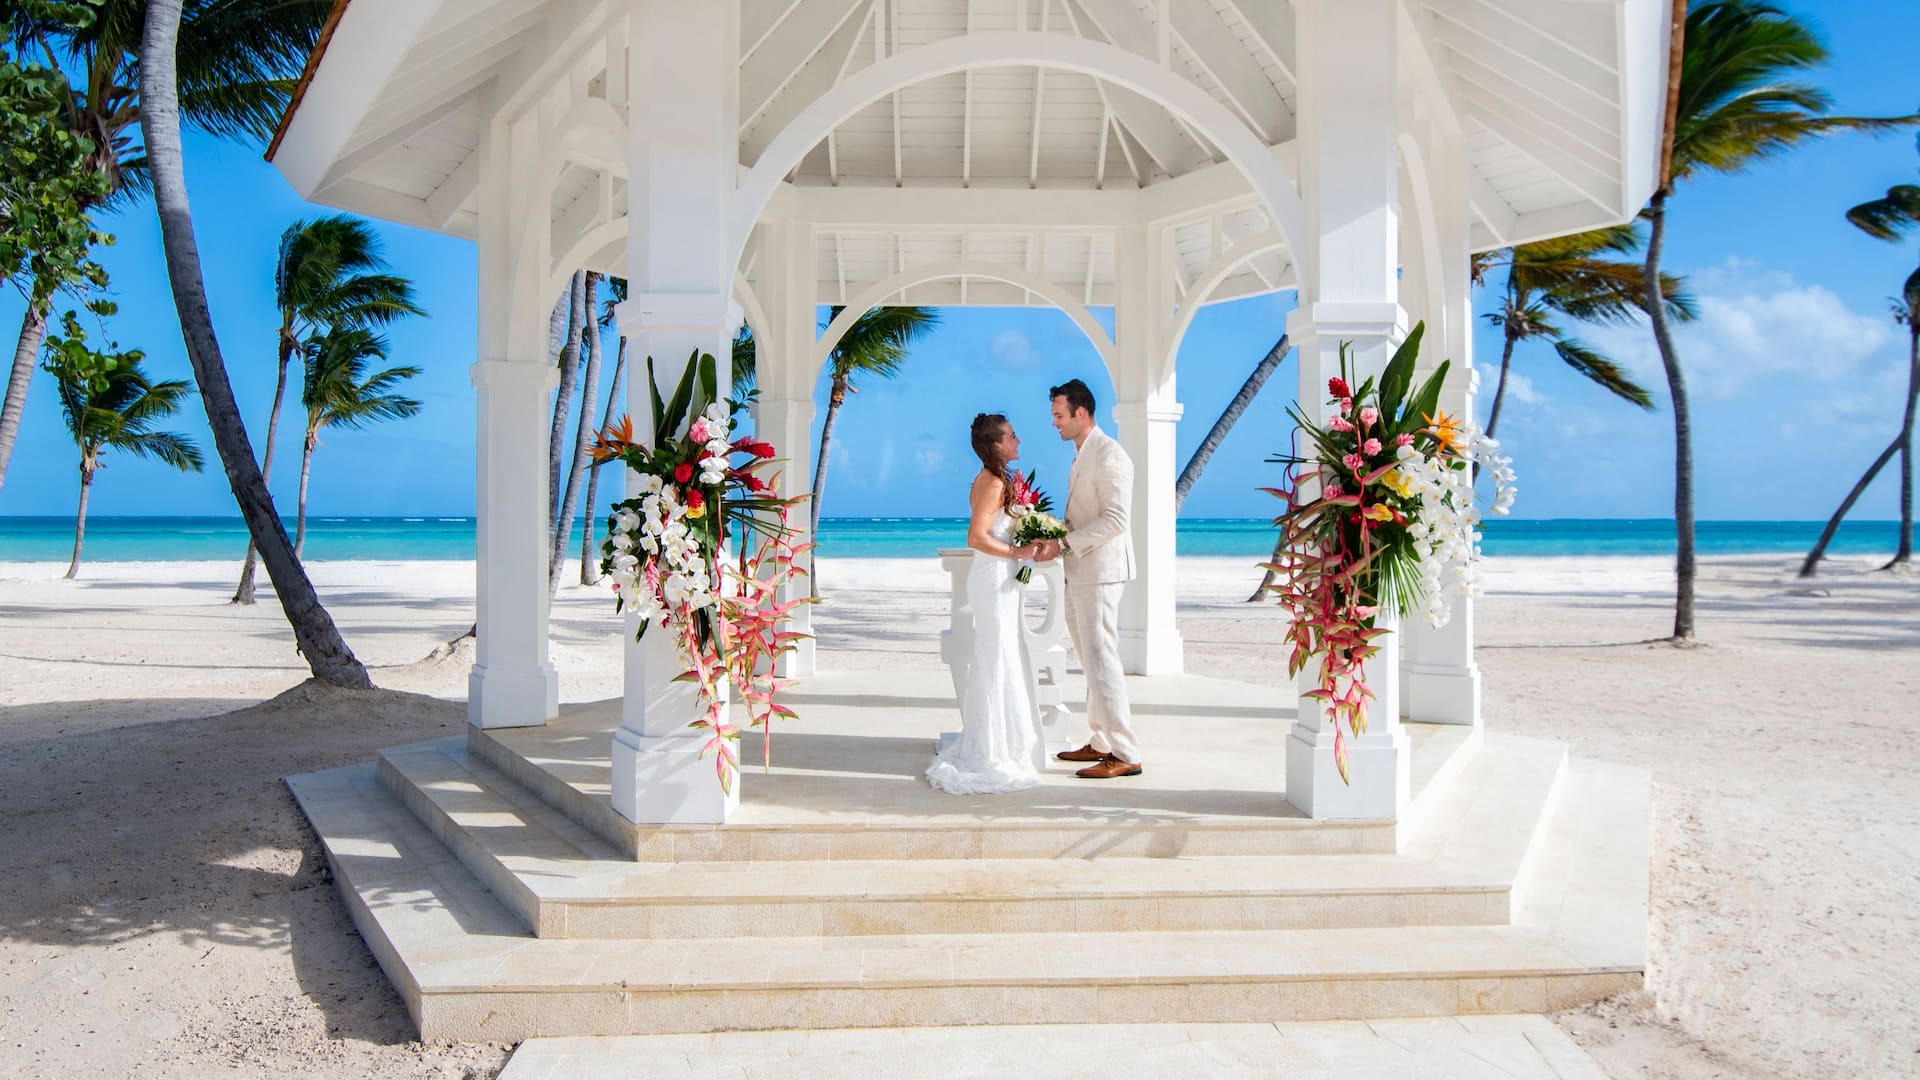 Wedding setup on resort beachfront Cap Cana 